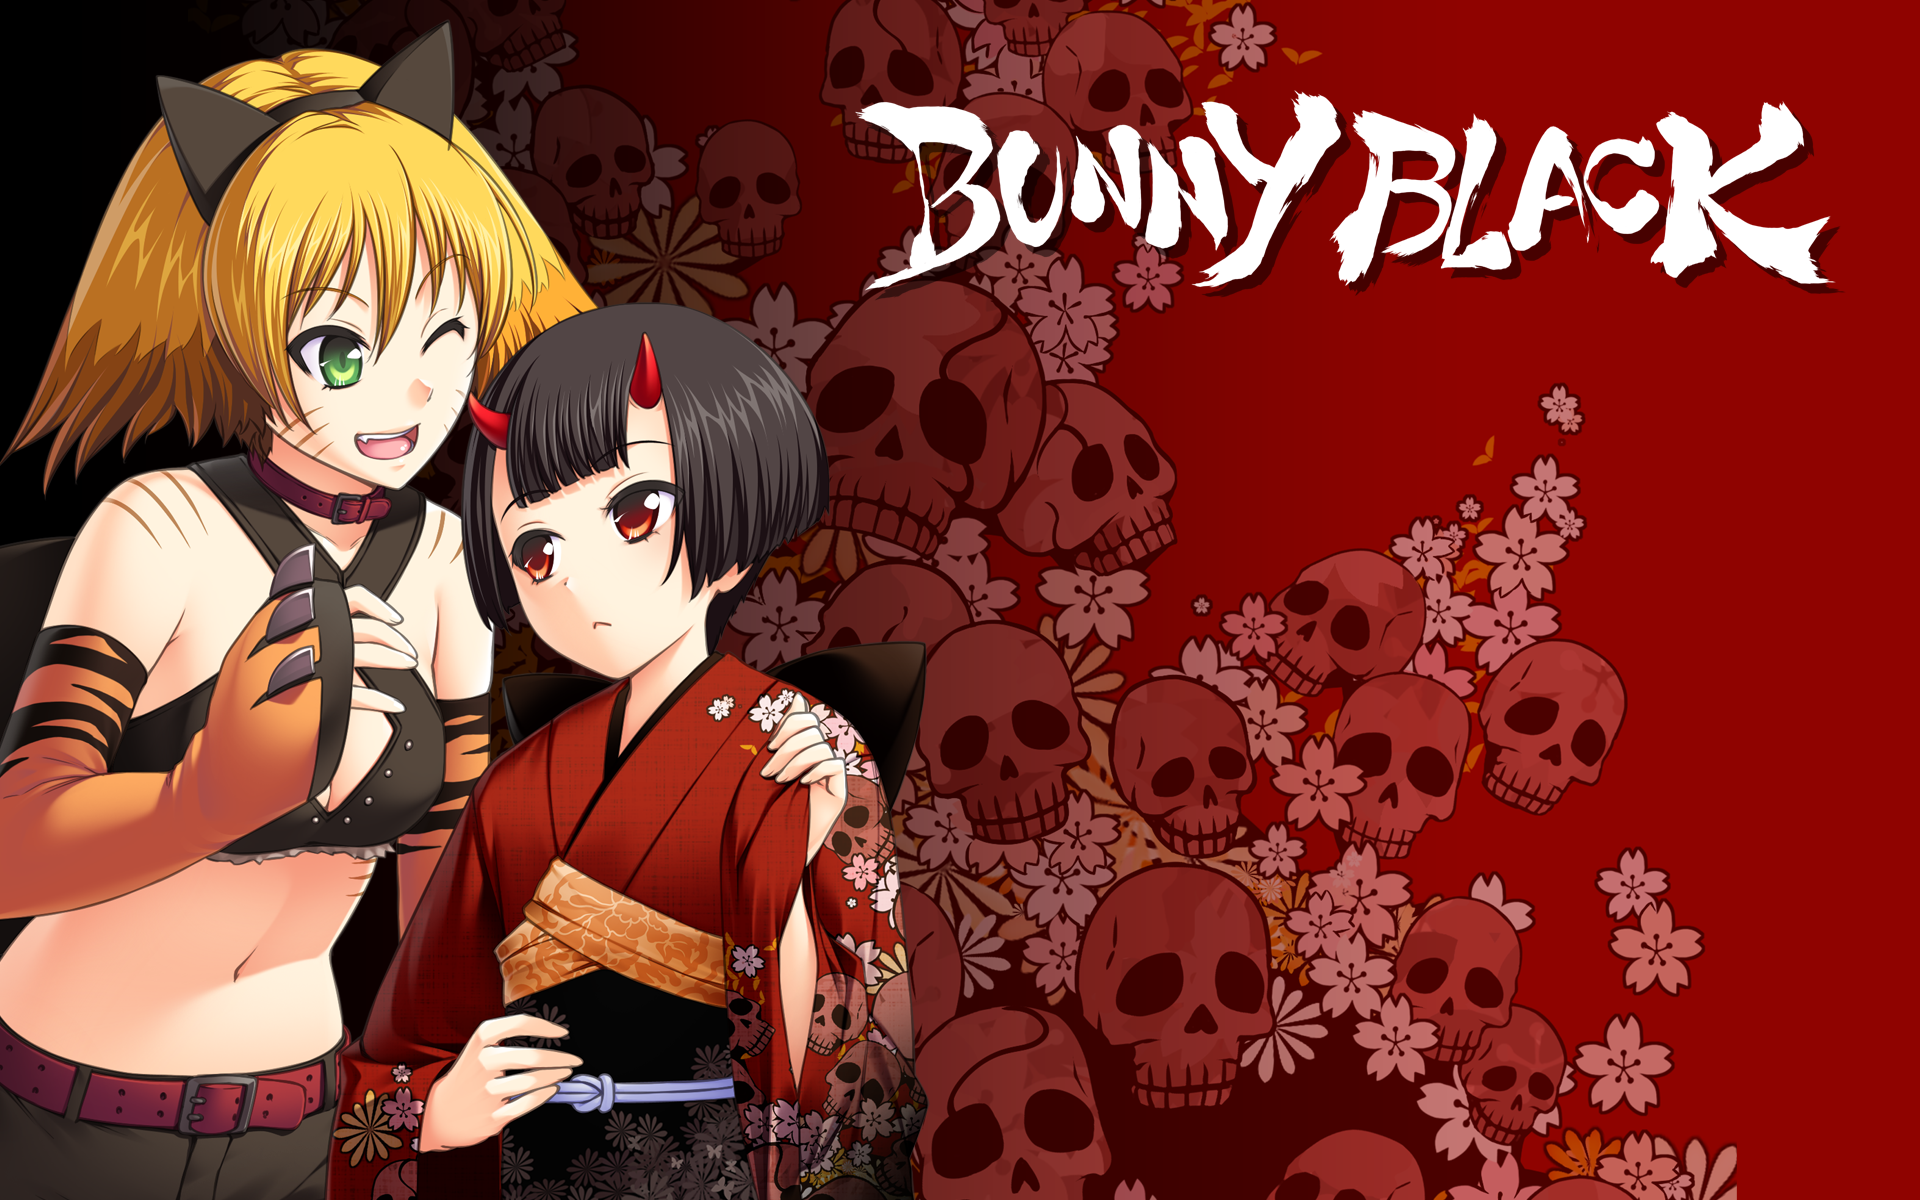 Bunny Black - desktop wallpaper